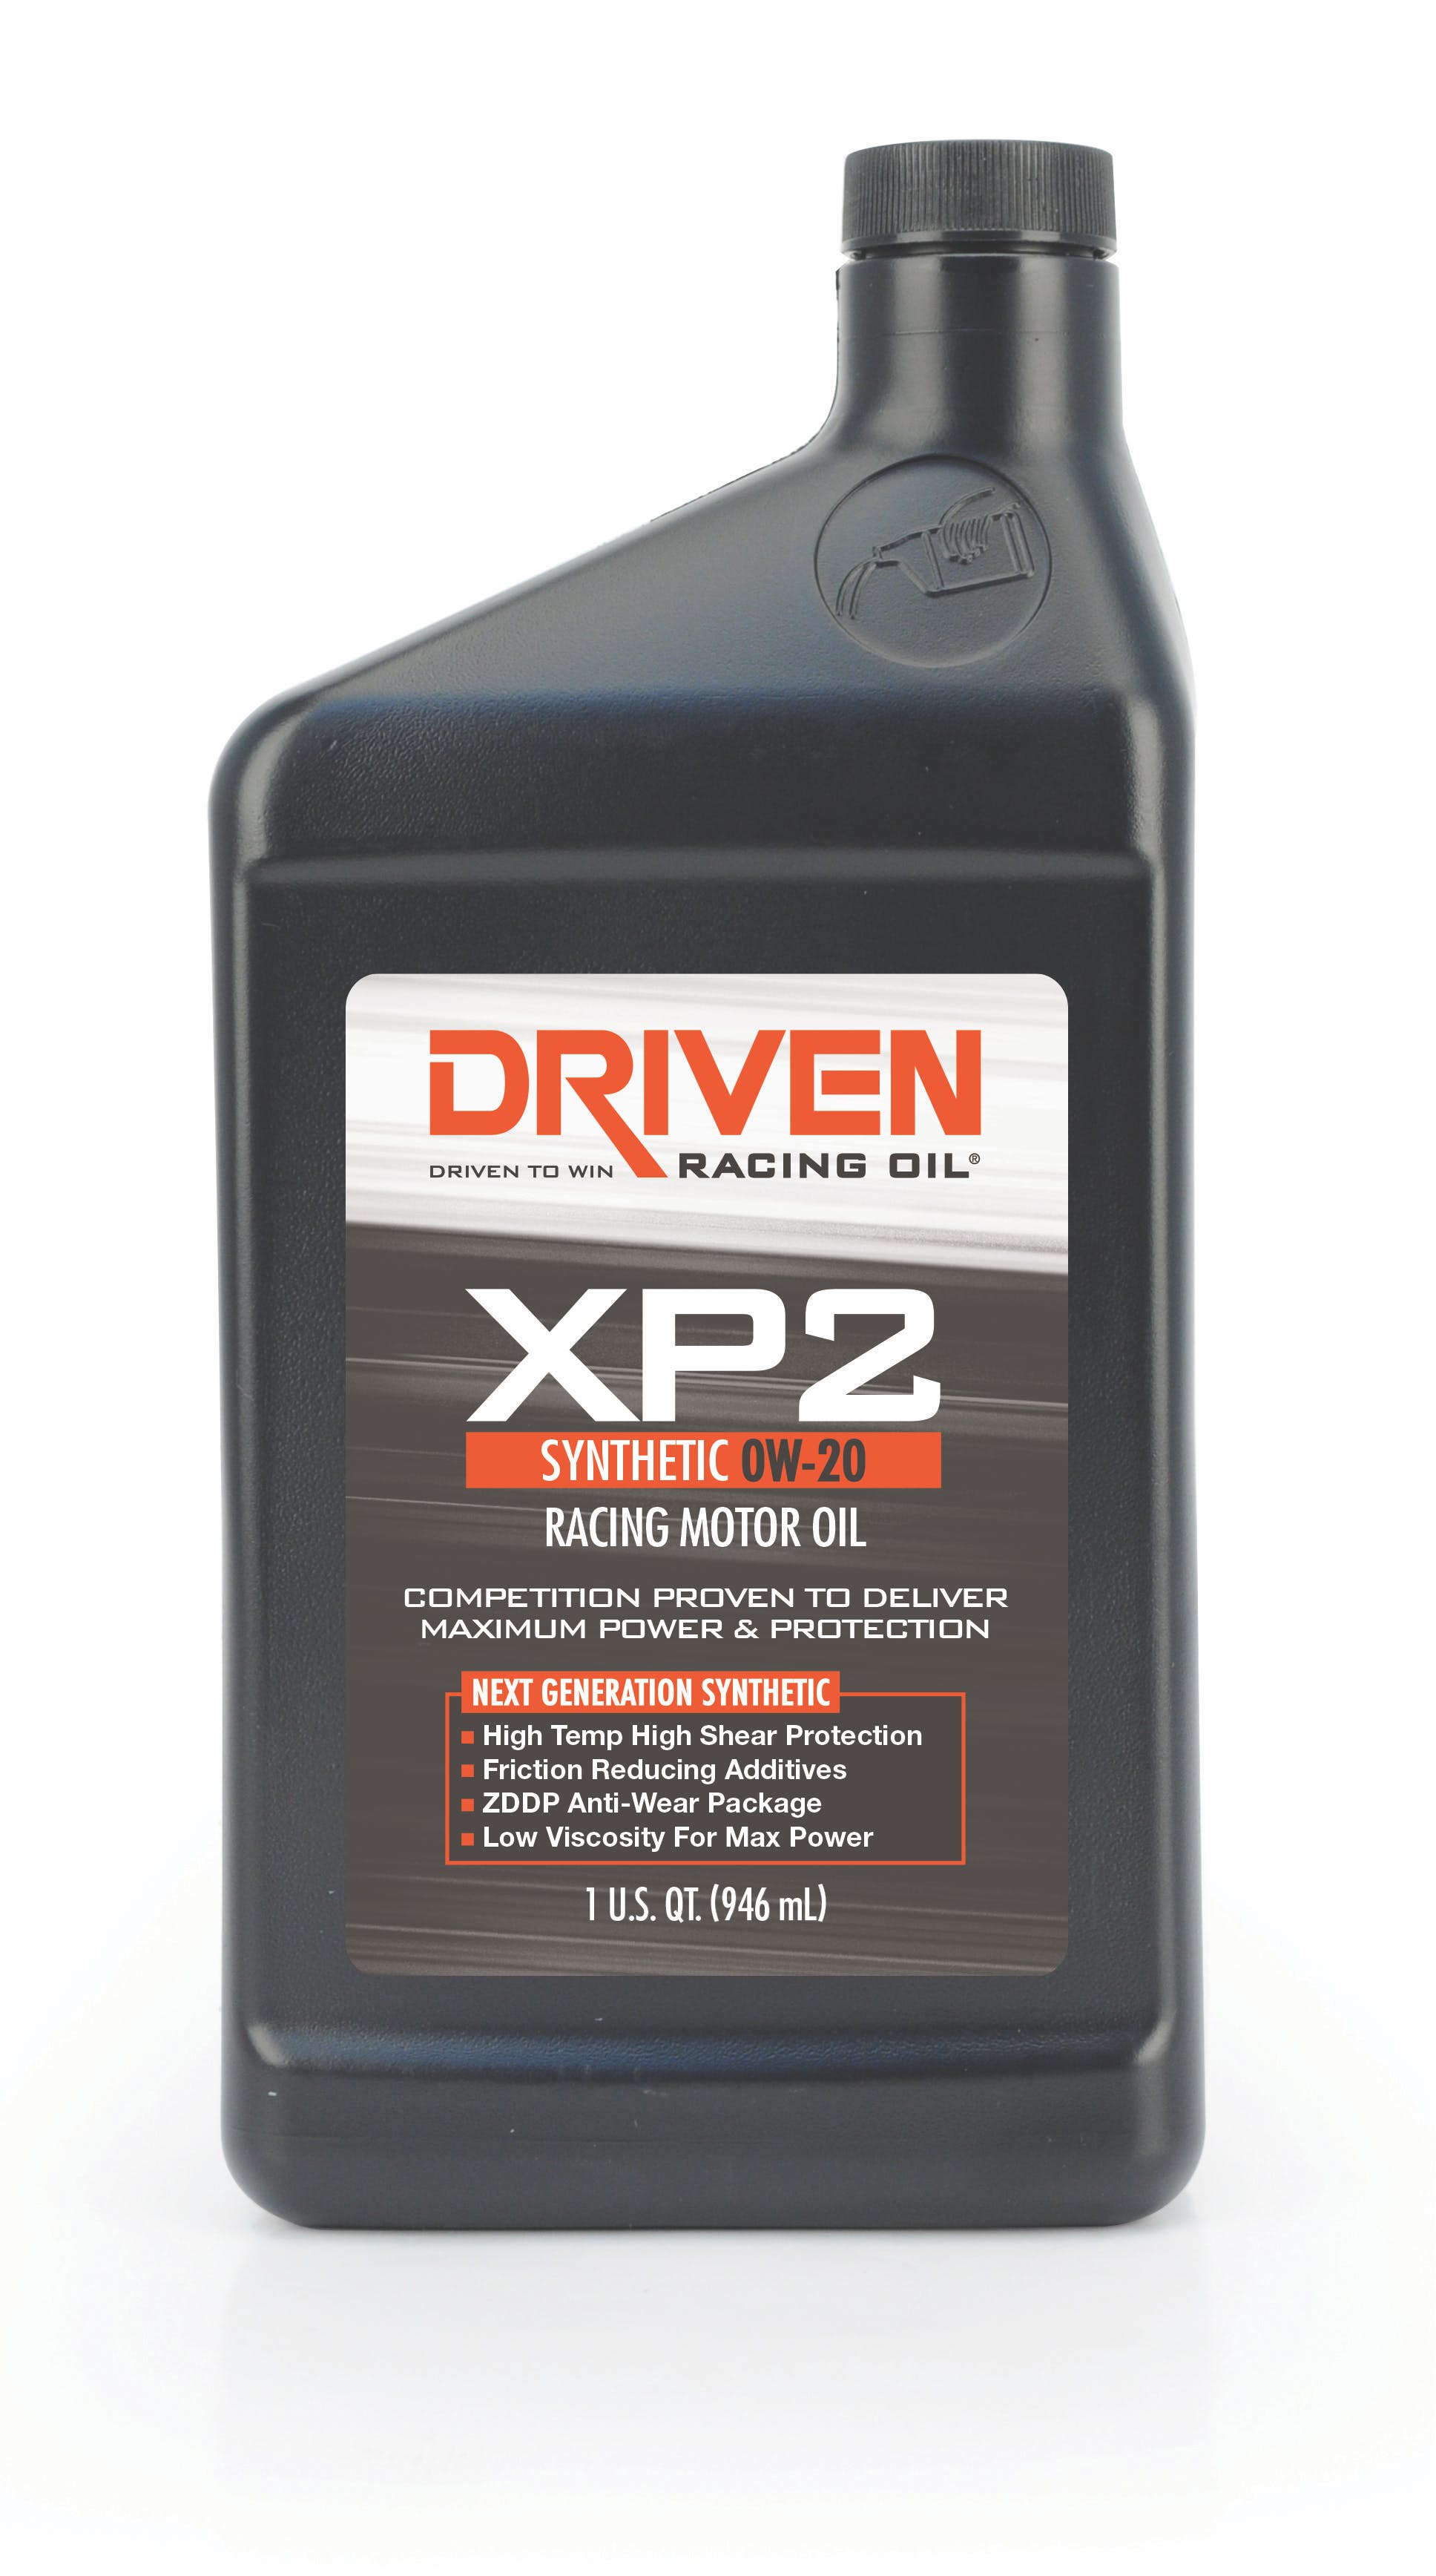 Driven Racing Oil 00206 XP2 0W-20 Synthetic Racing Motor Oil (1 qt. bottle)